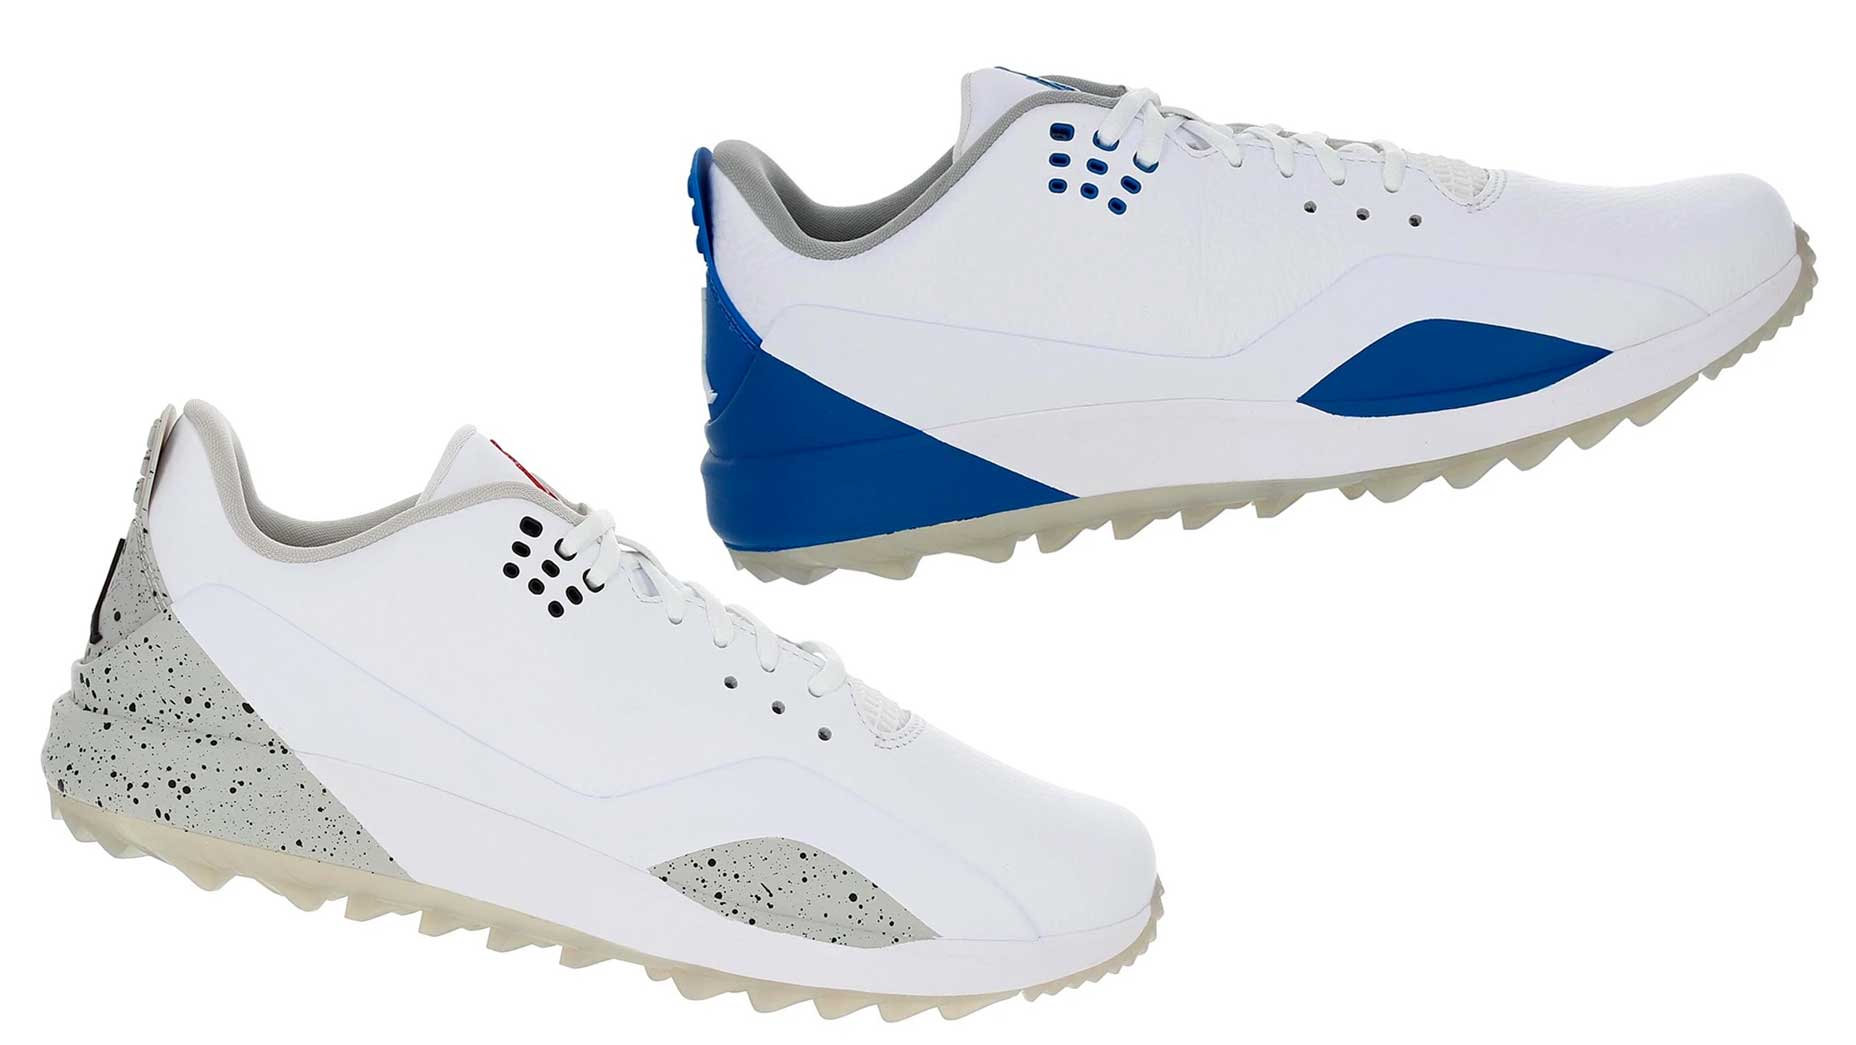 Gimme that: Add the Nike Jordan ADG 3 golf shoes ...